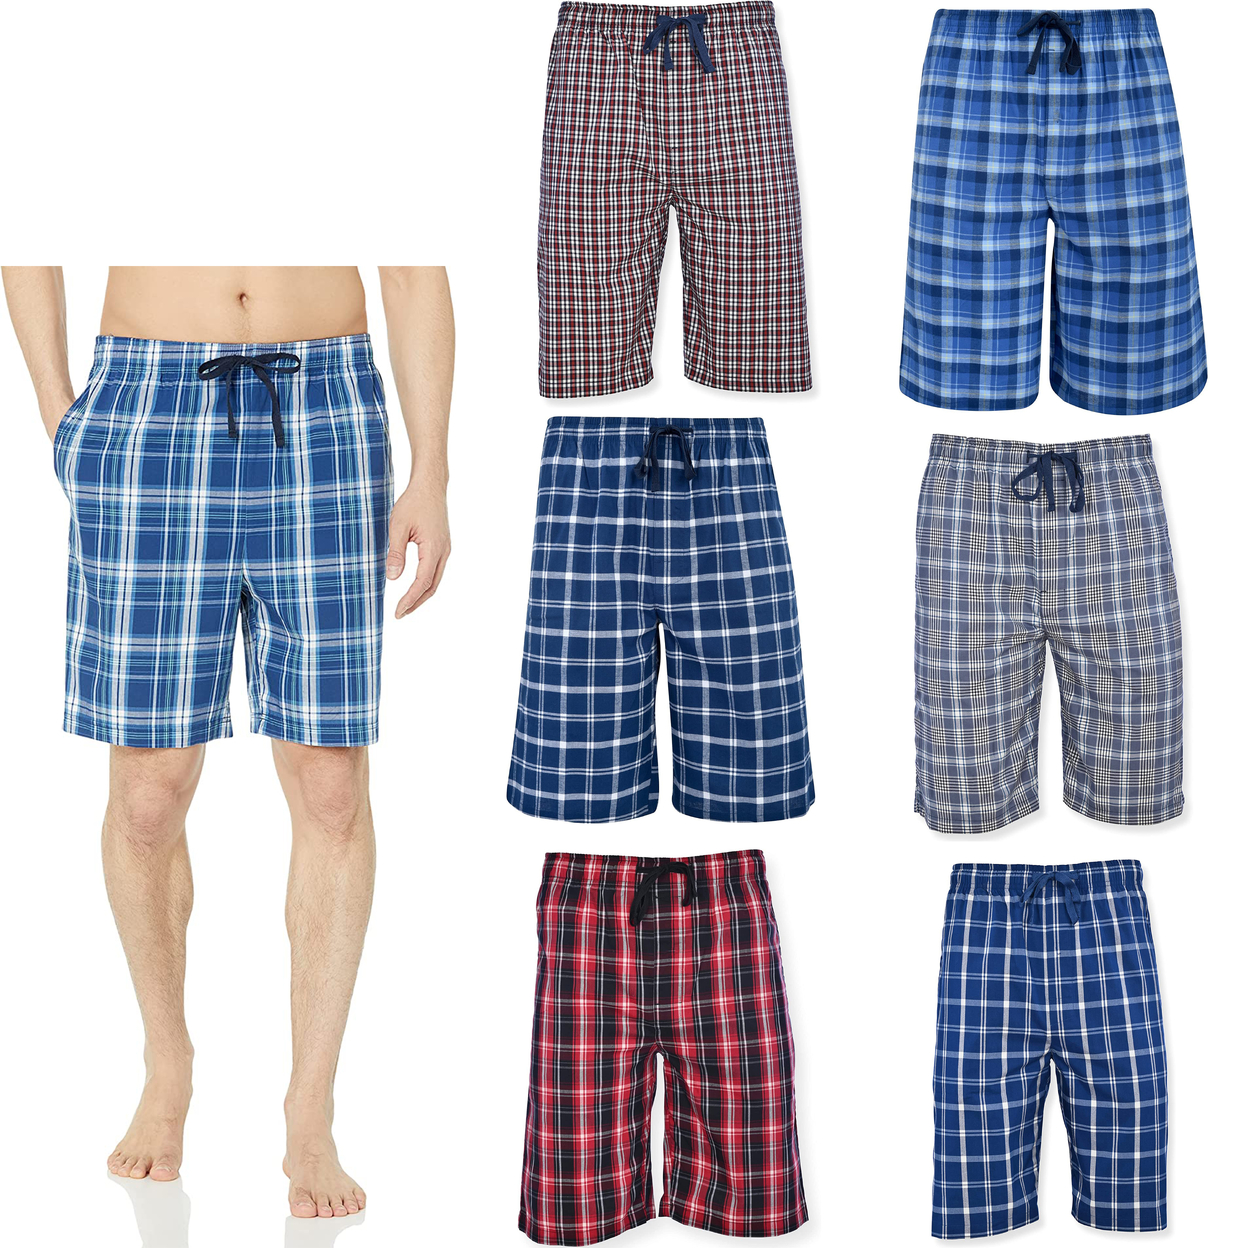 2-Pack: Men's Ultra Soft Plaid Lounge Pajama Sleep Wear Shorts - Grey & Grey, Large